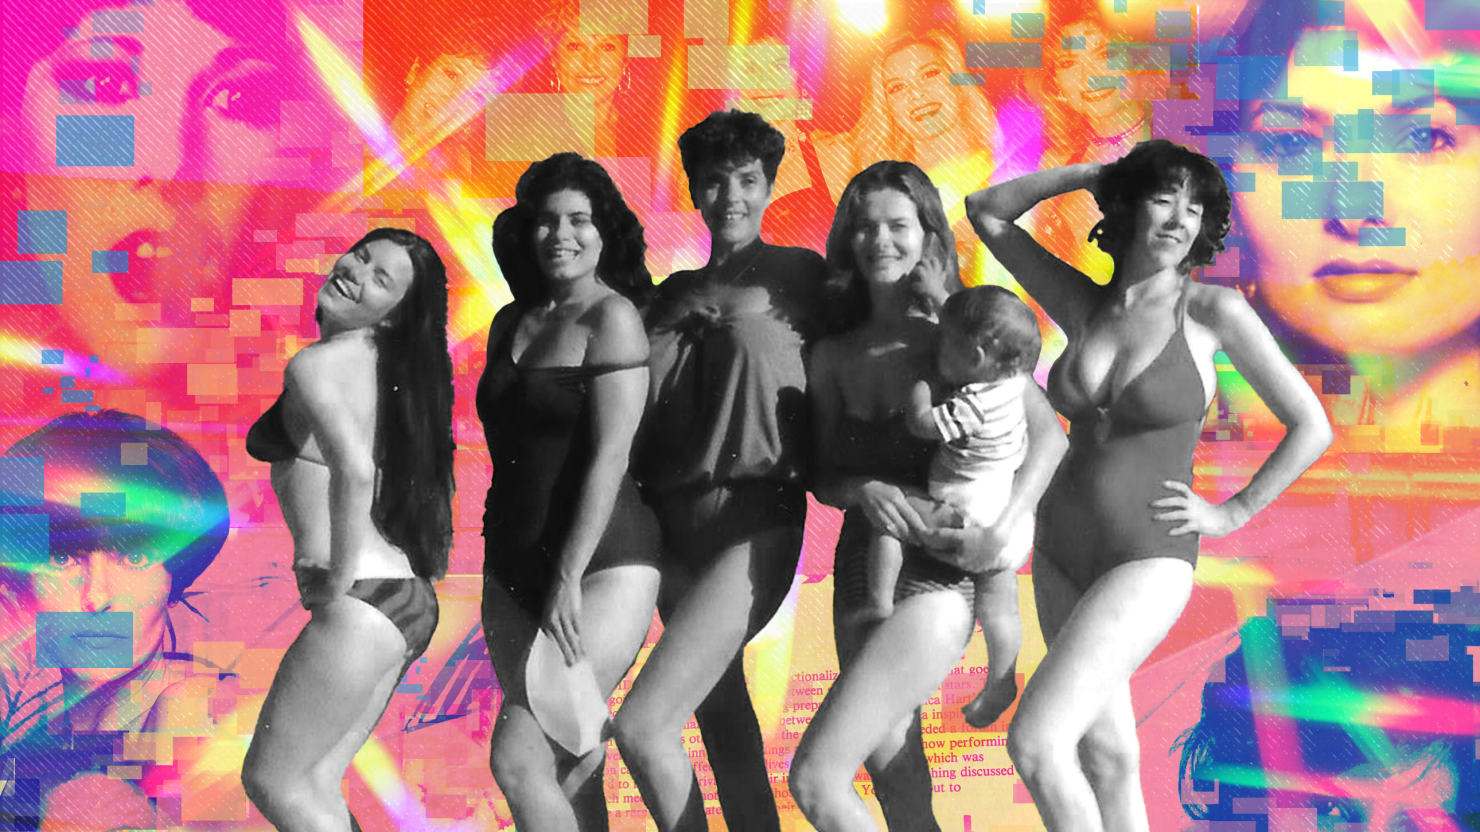 George St Sexy Bf - Club 90: The Secret Women's Club That Rocked the Porn World